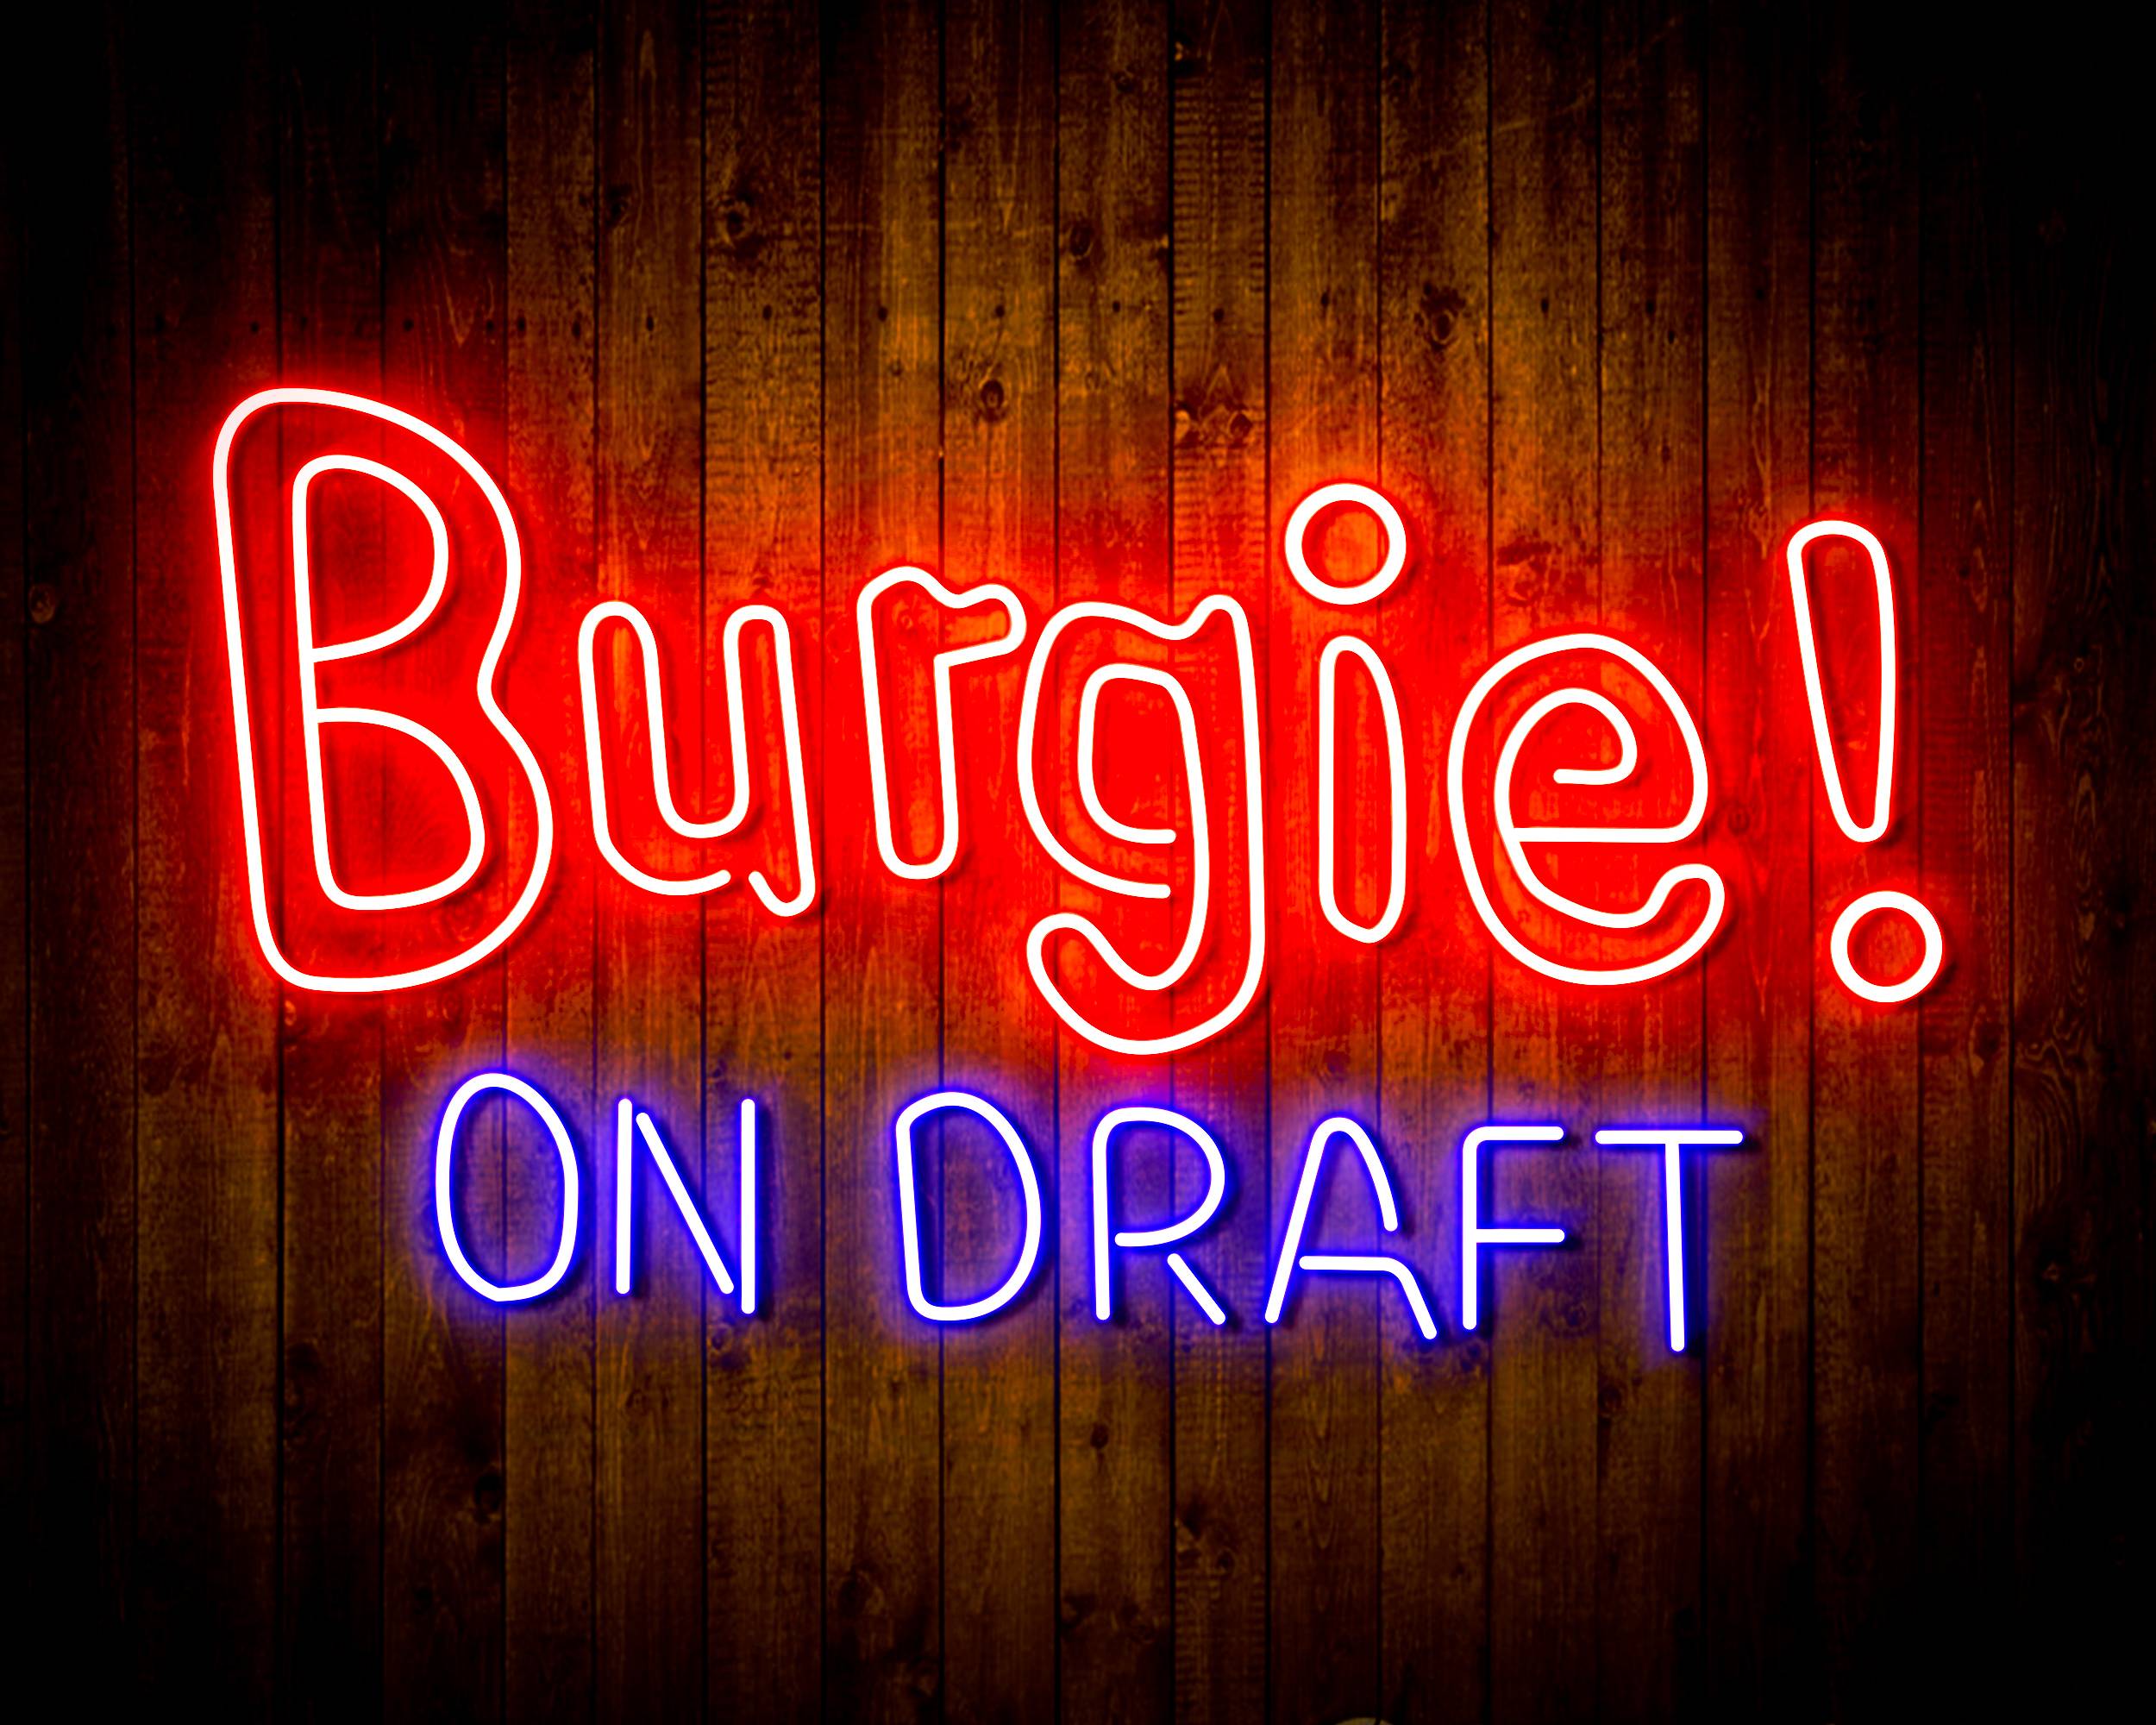 Burgie! On Draft Bar Neon LED Sign